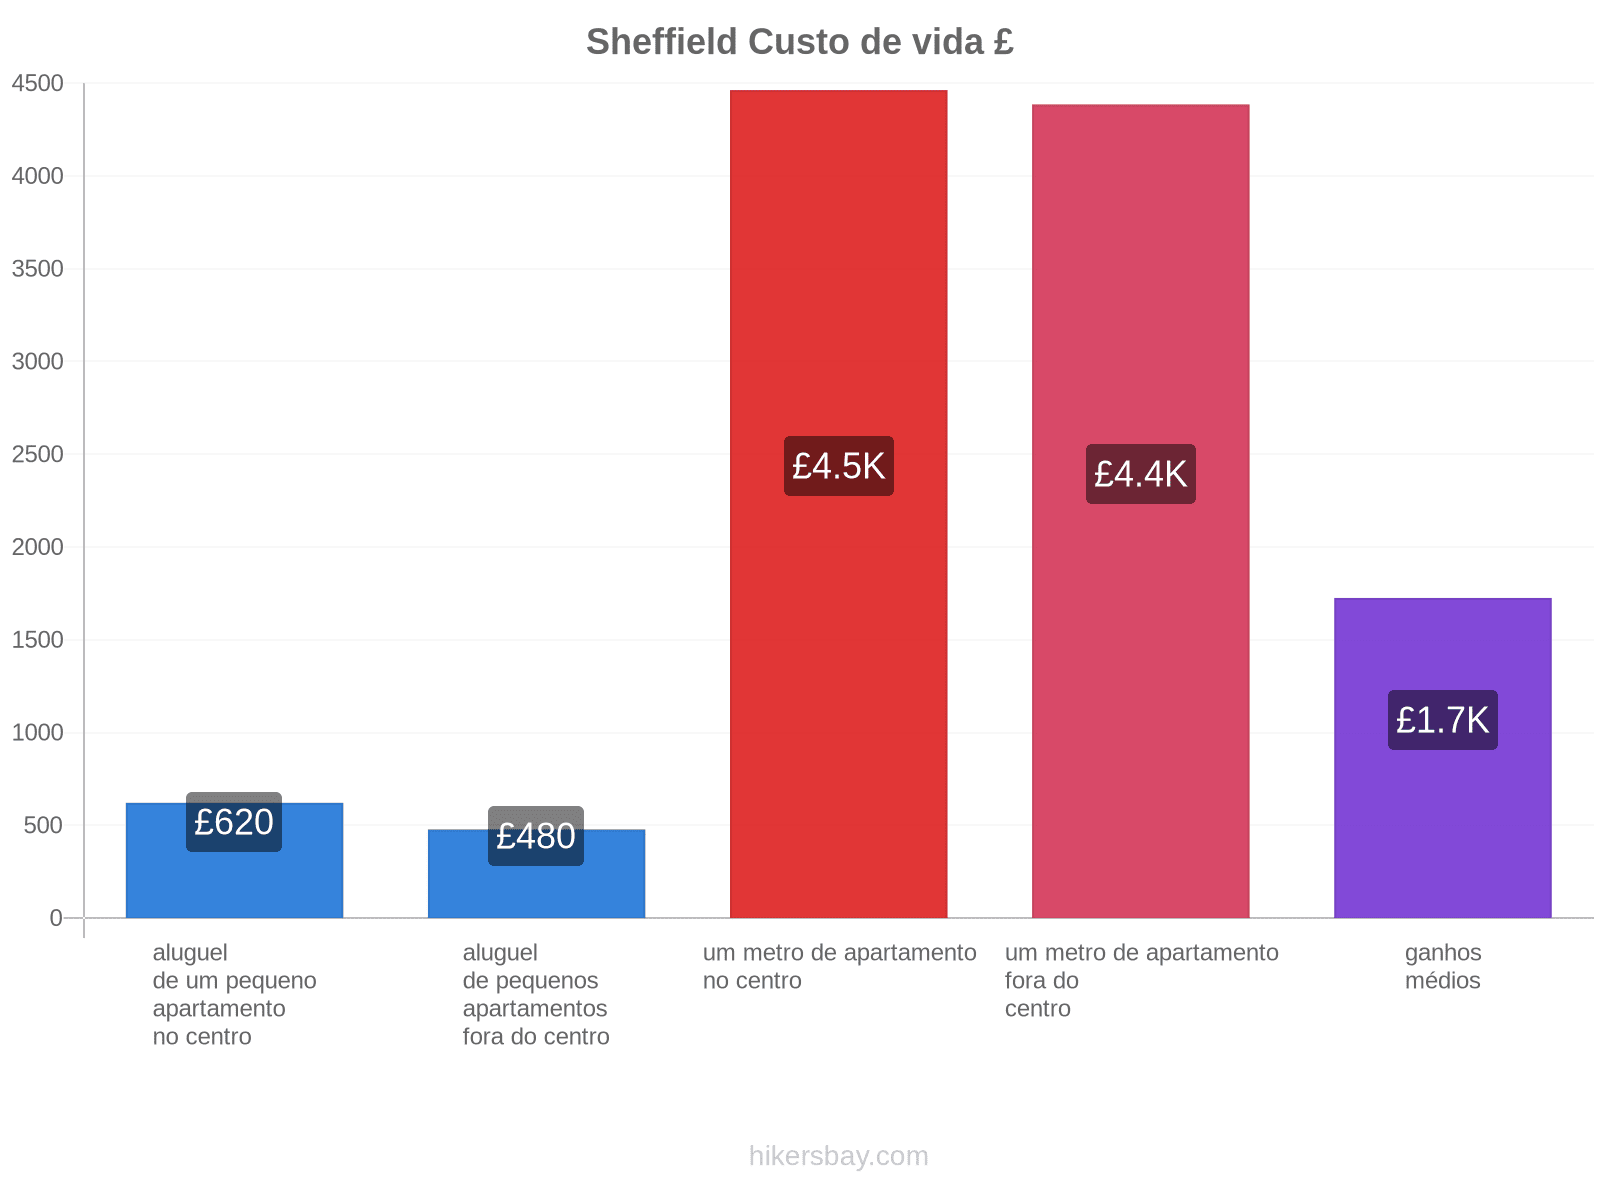 Sheffield custo de vida hikersbay.com